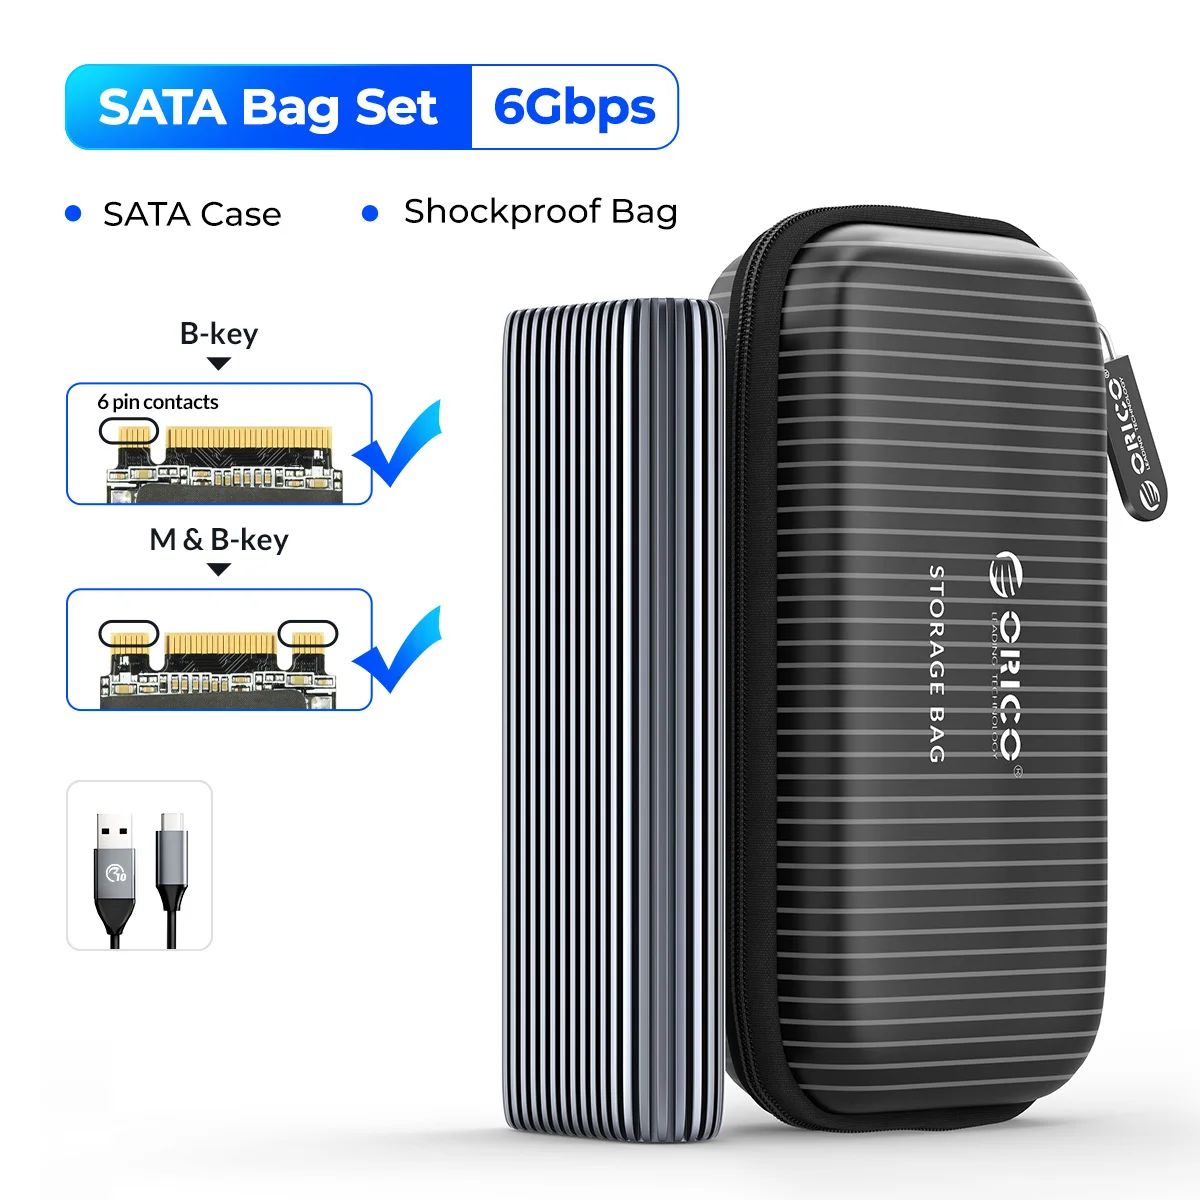 Color:SATA Bag Set -6Gbps